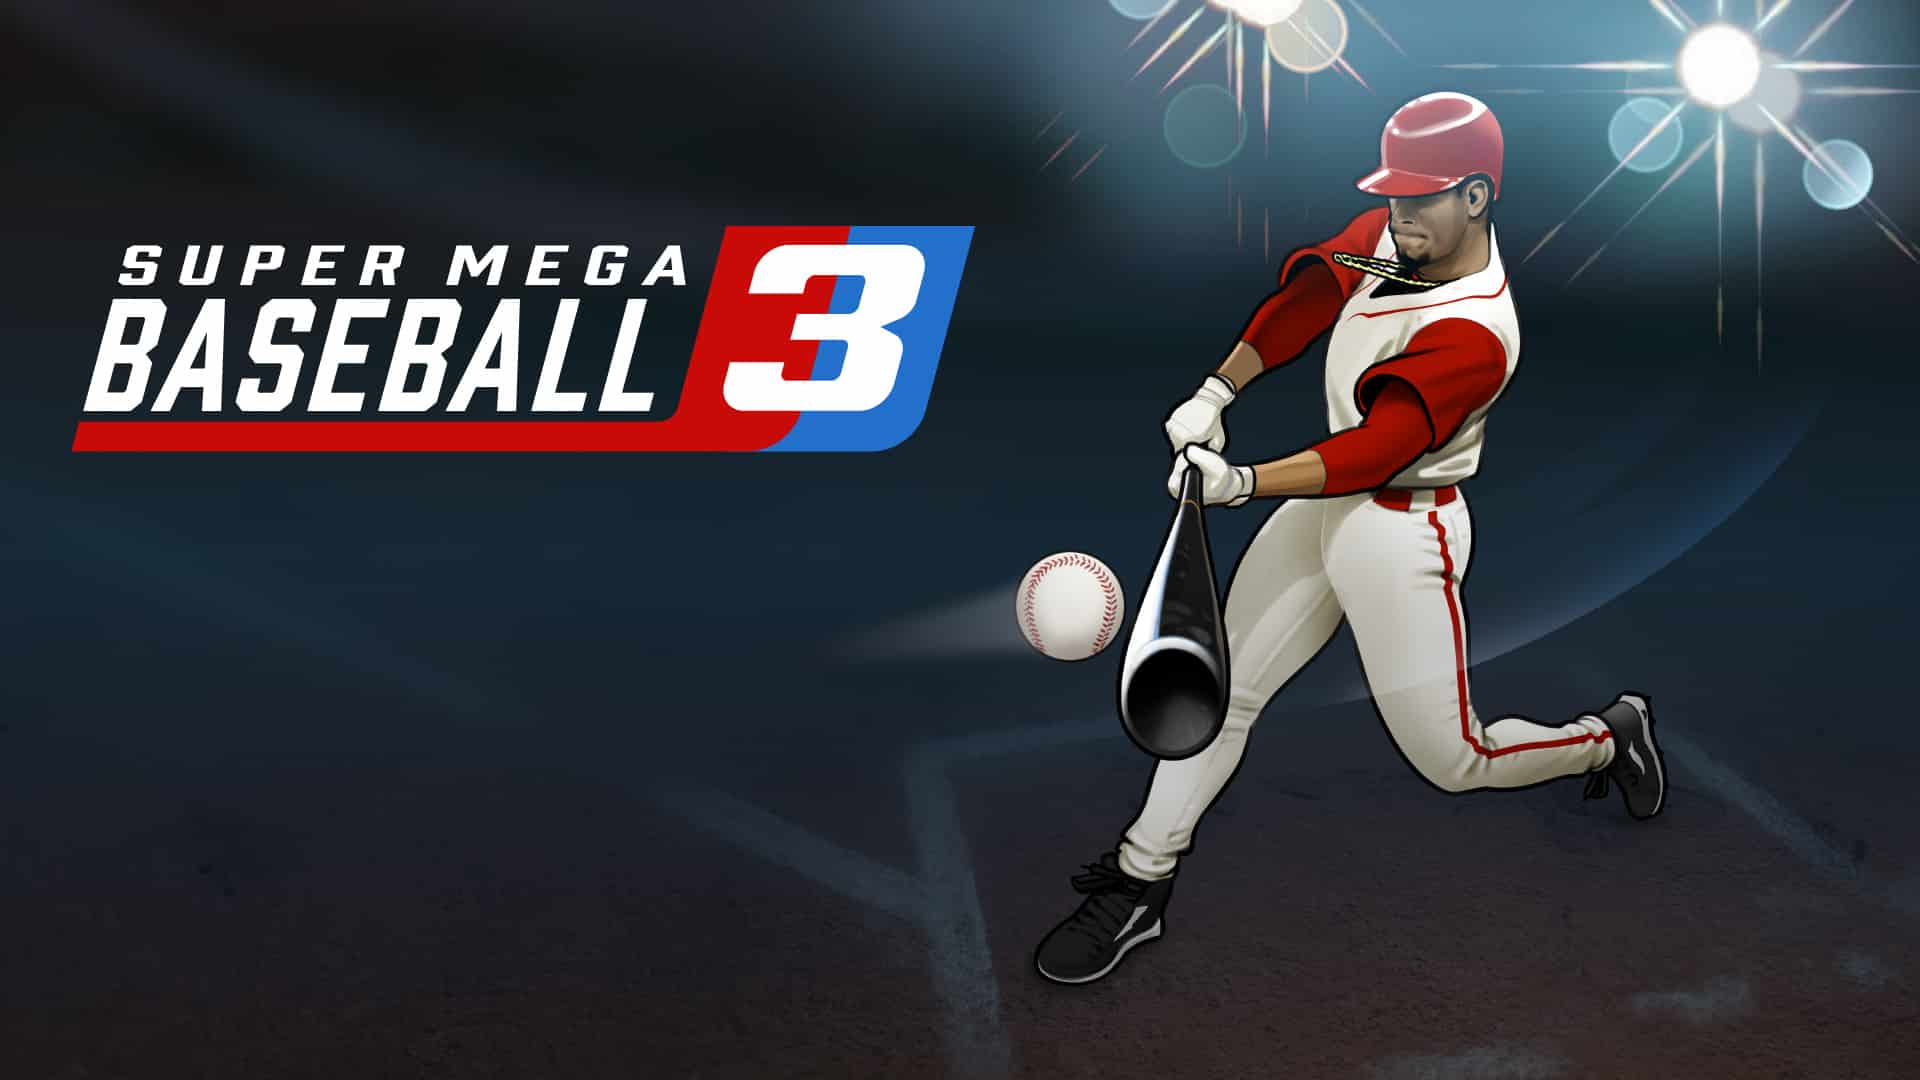 Super Mega Baseball 3 player count stats